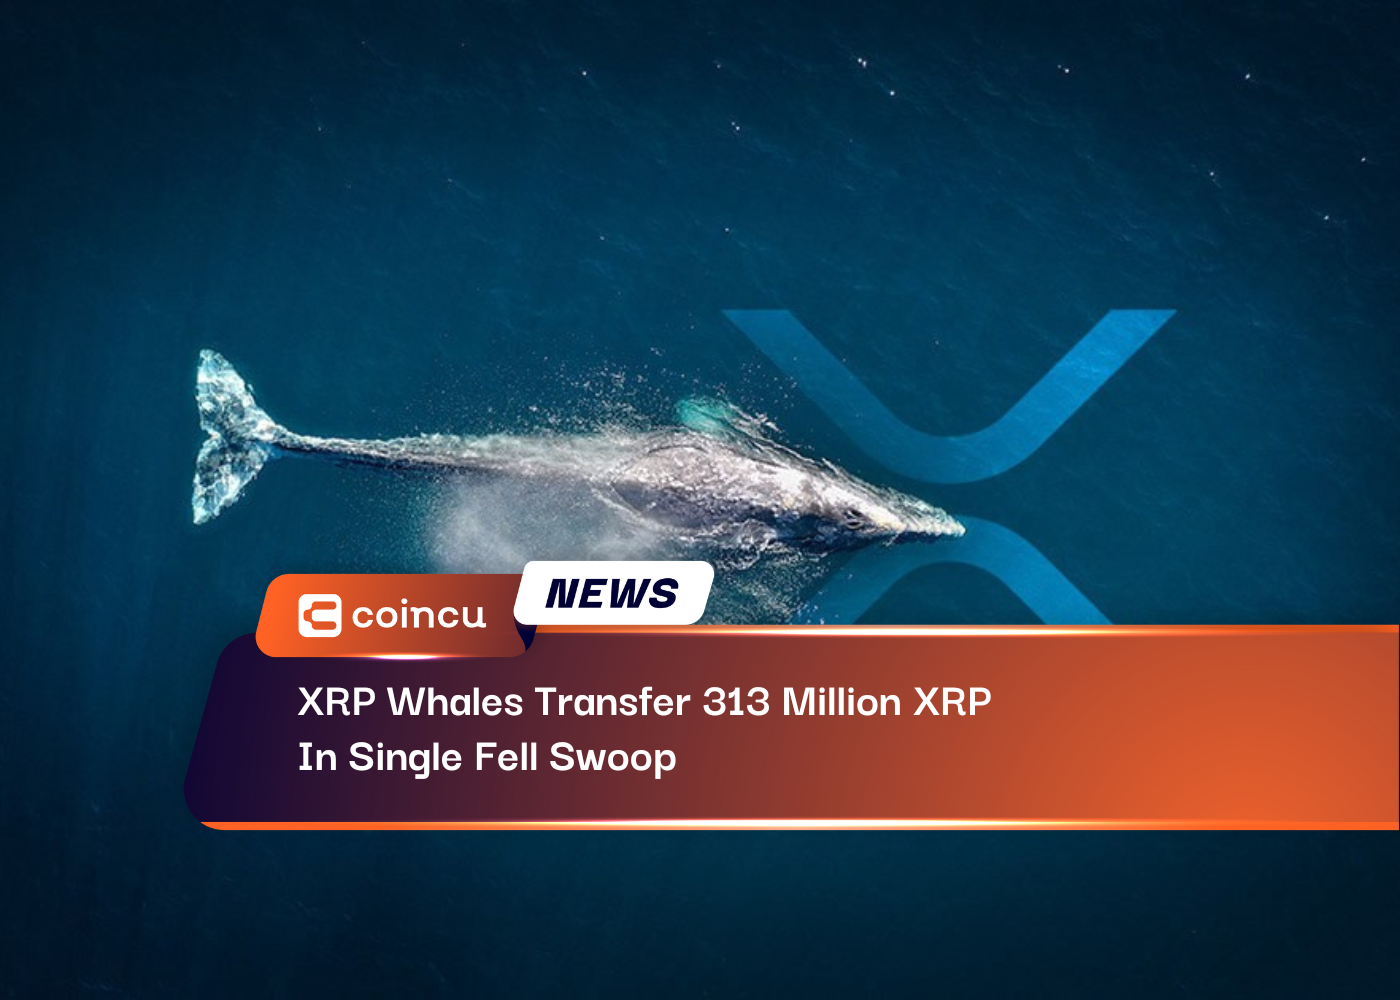 XRP Whales Transfer 313 Million XRP